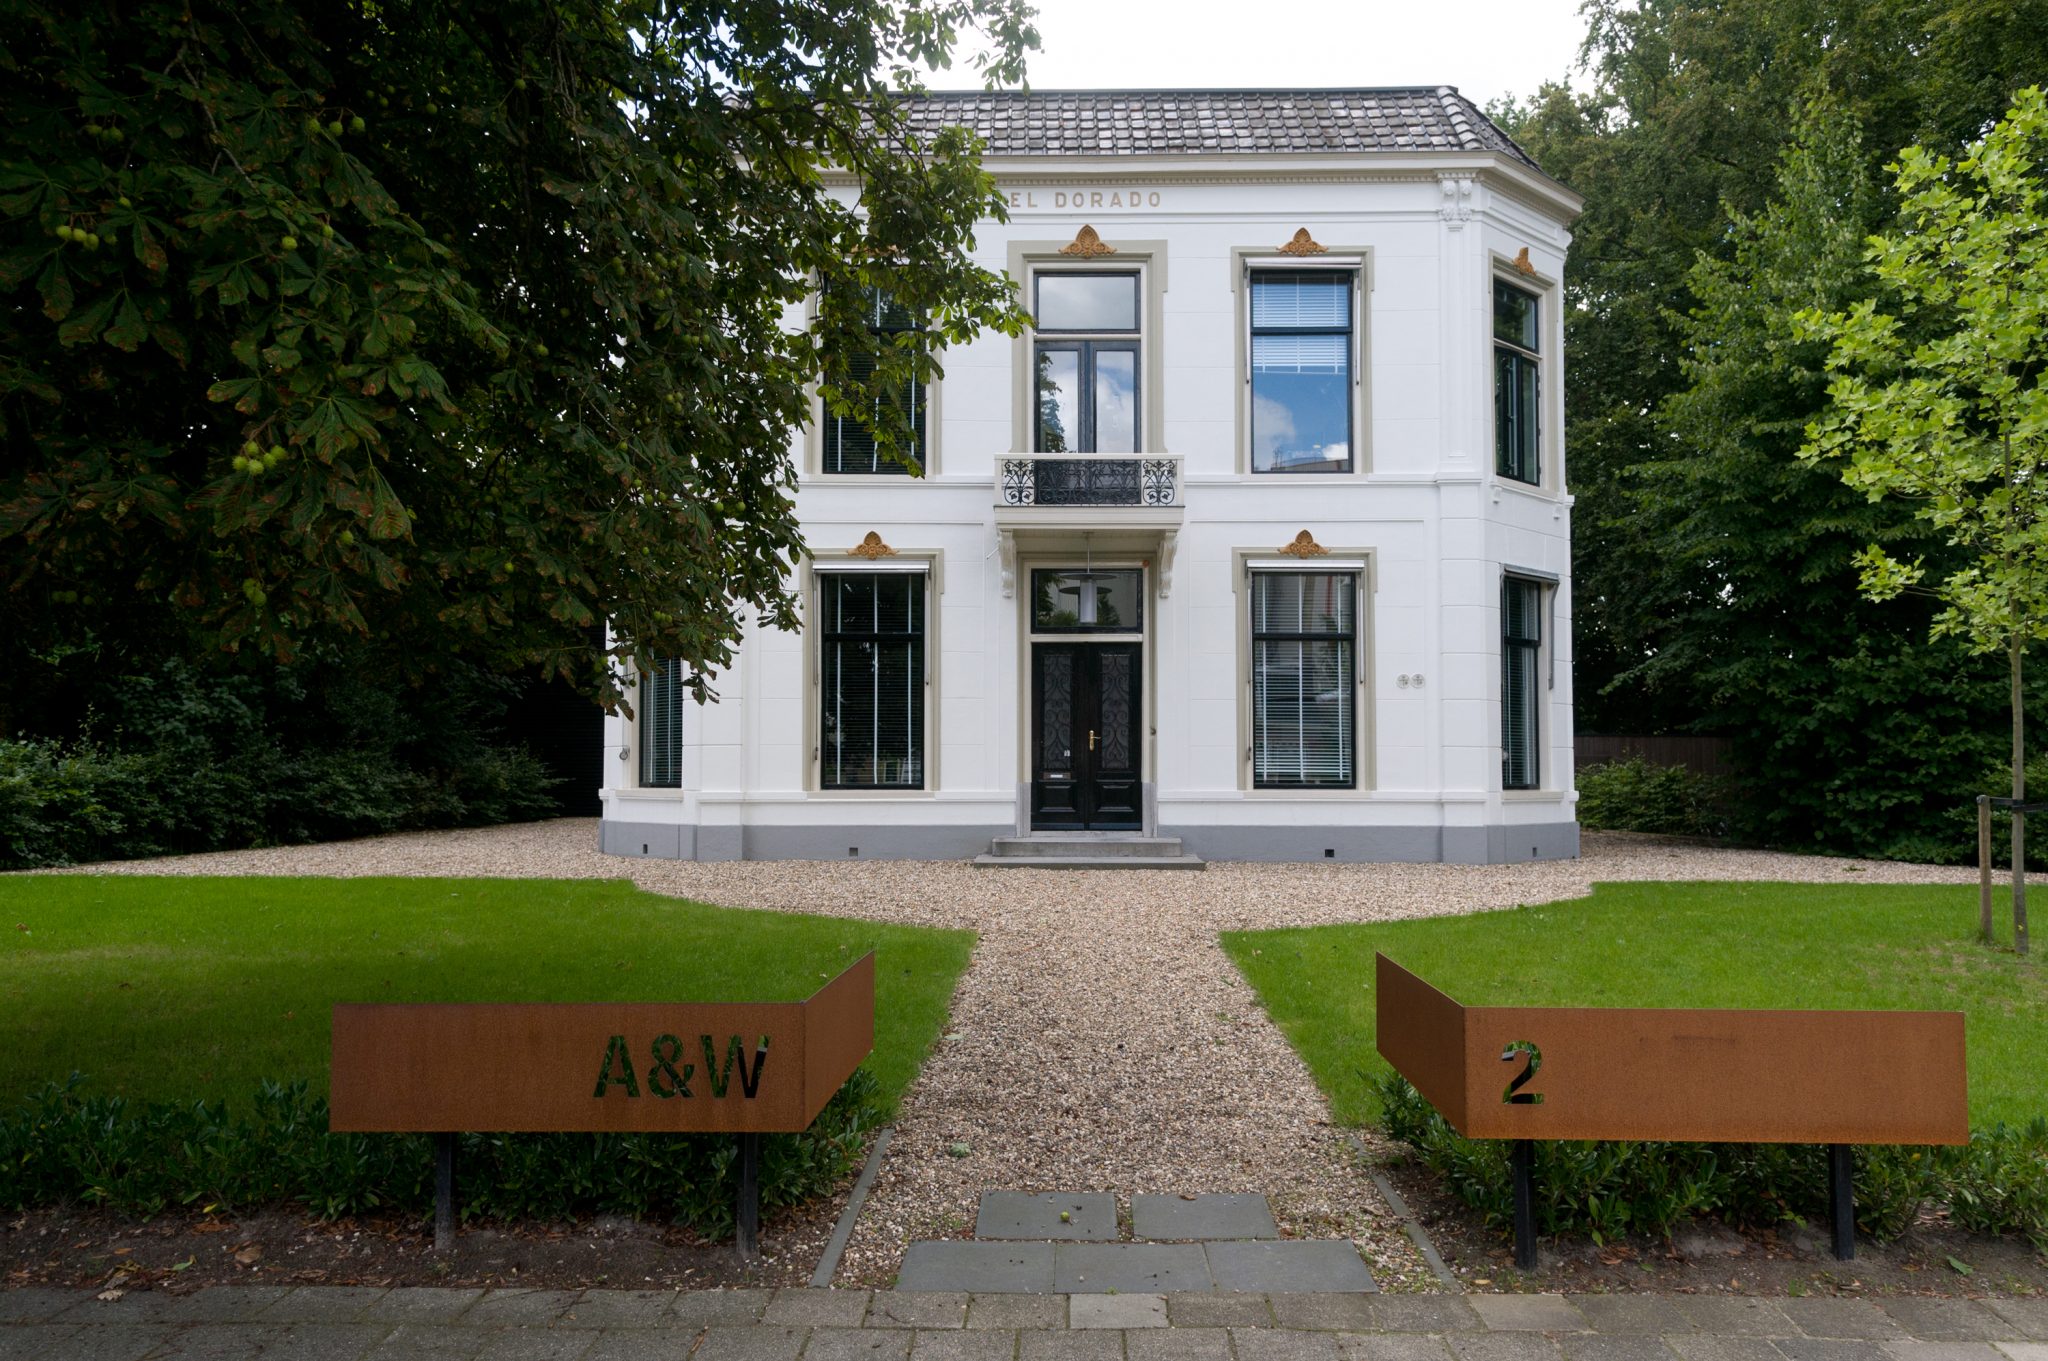 Kantoorpand A&W. Foto Kees van den Akker